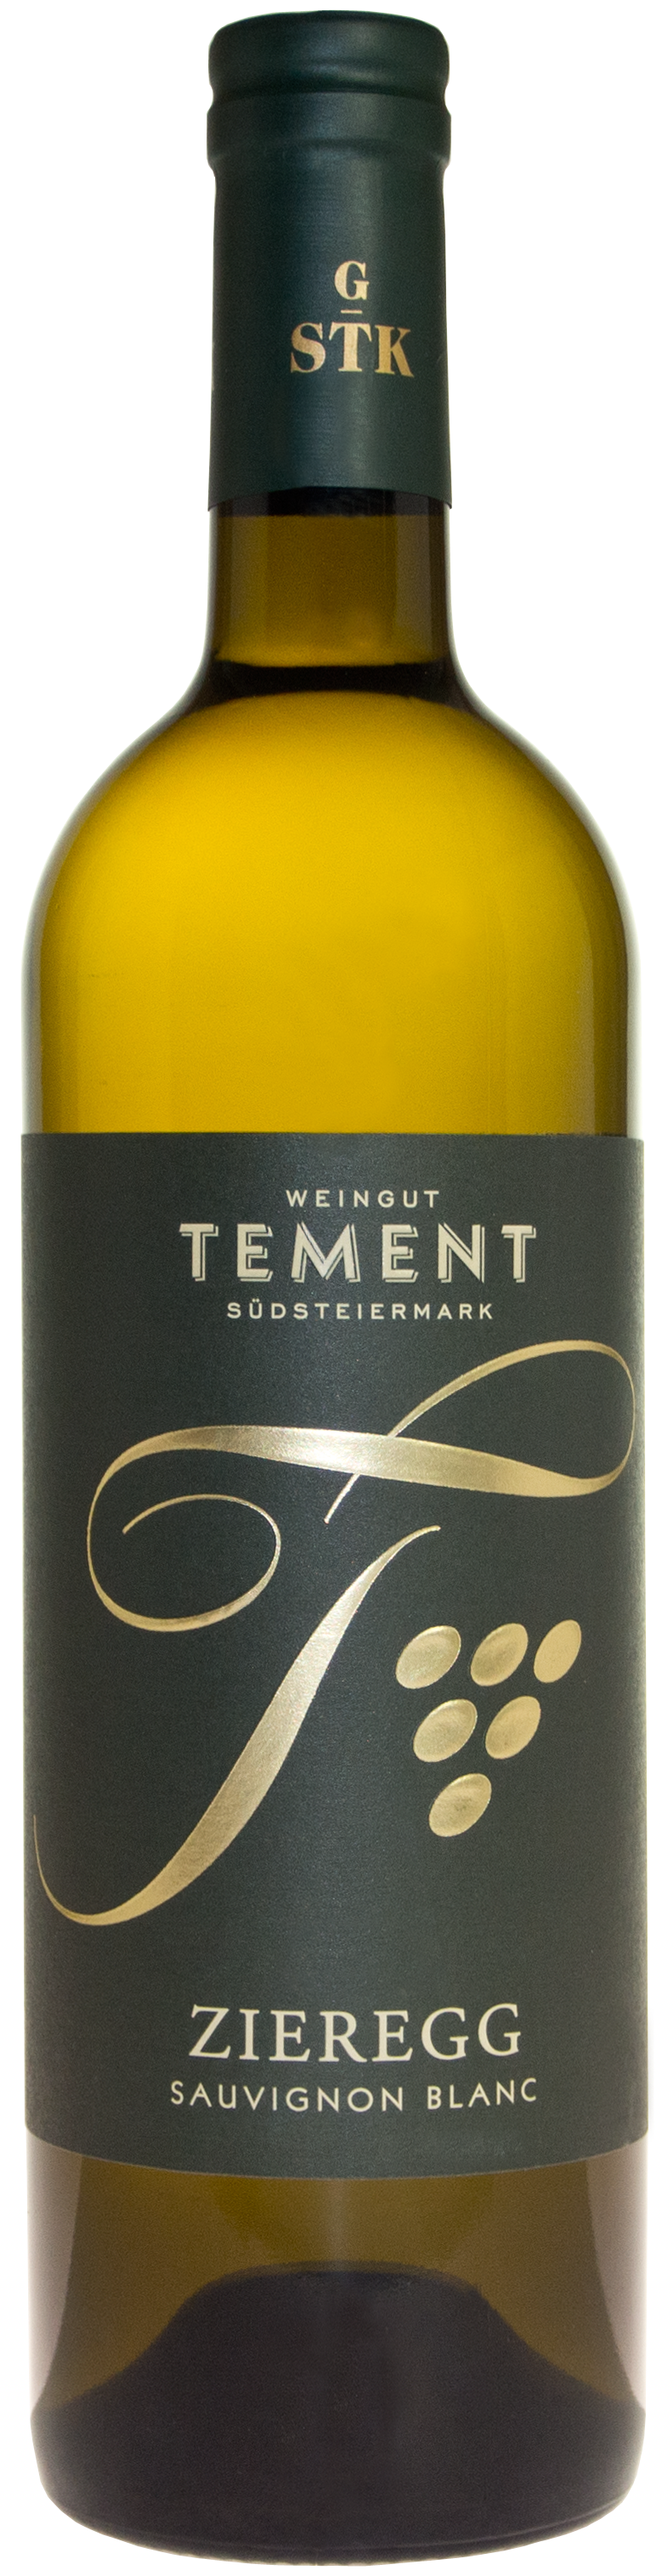 Tement, Zieregg Sauvignon Blanc, 2014